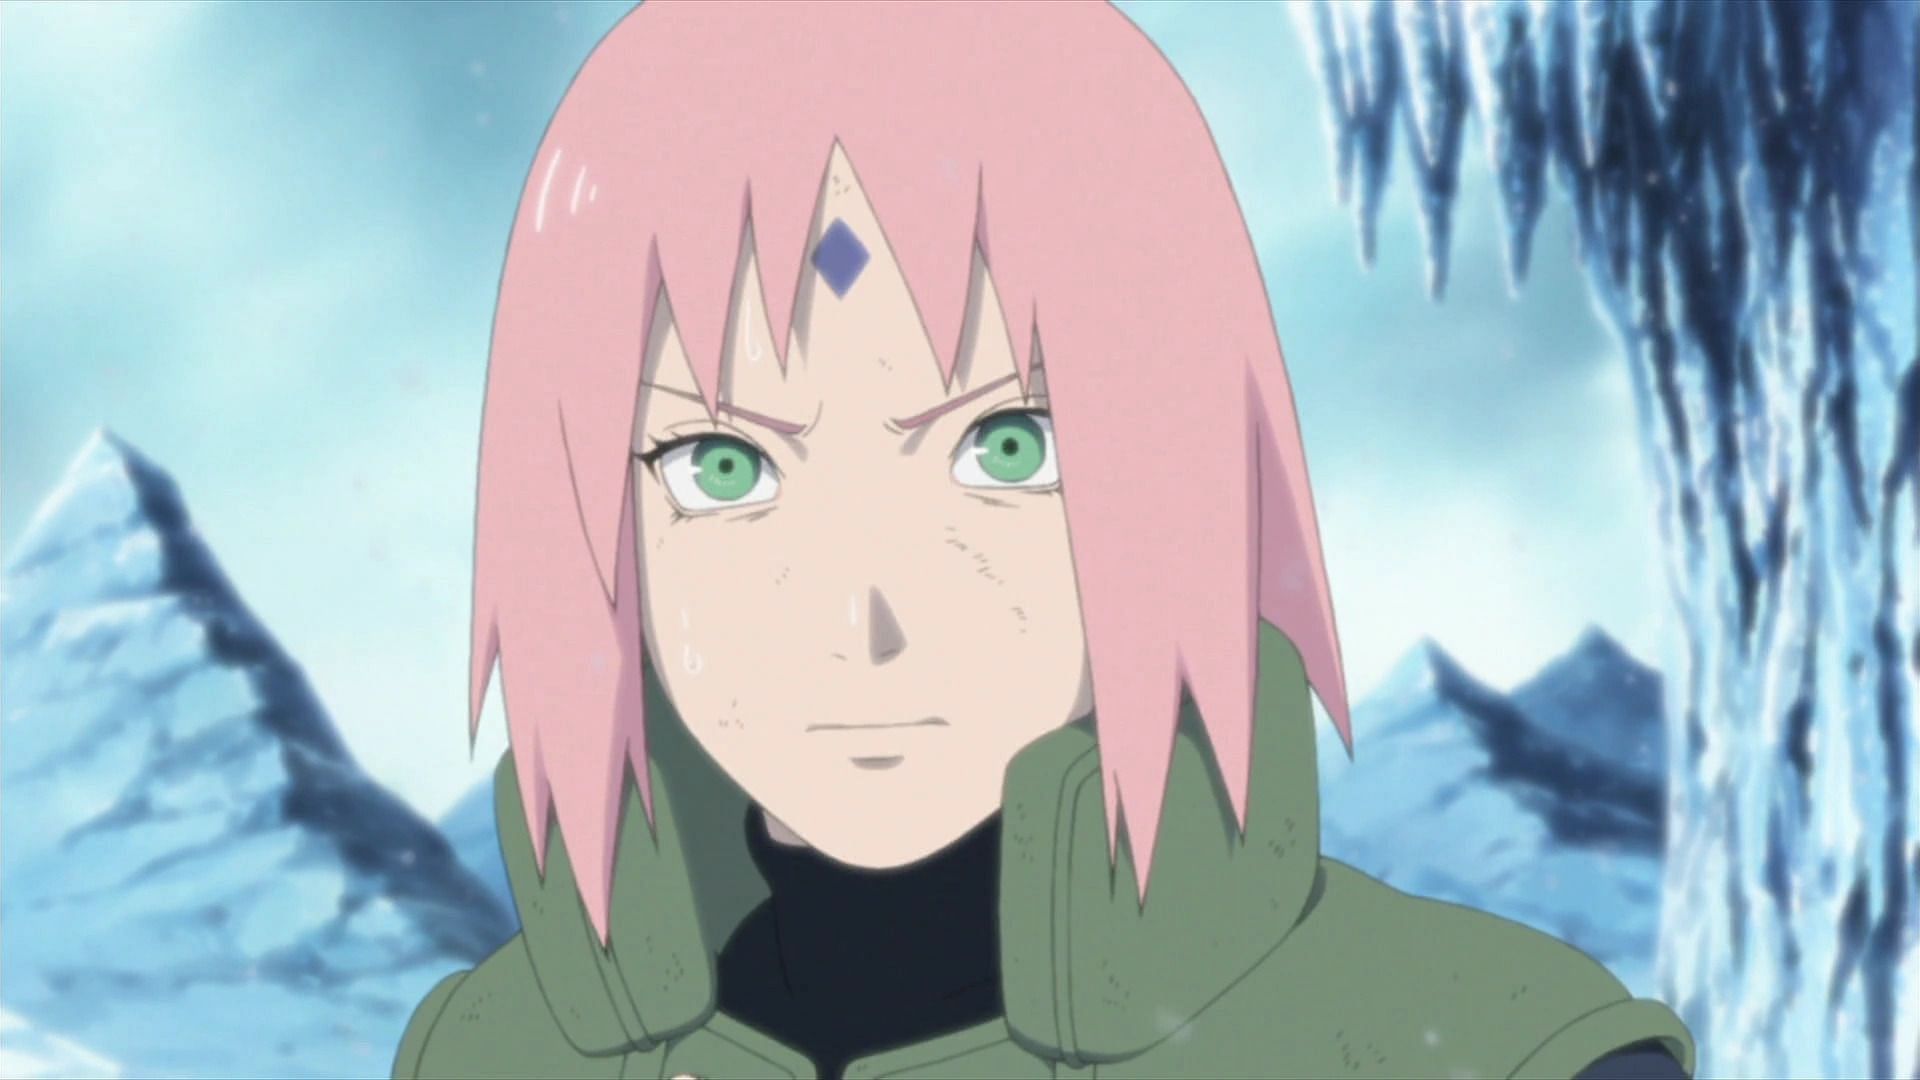 Sakura as seen in Naruto Shippuden (Image via Studio Pierrot)